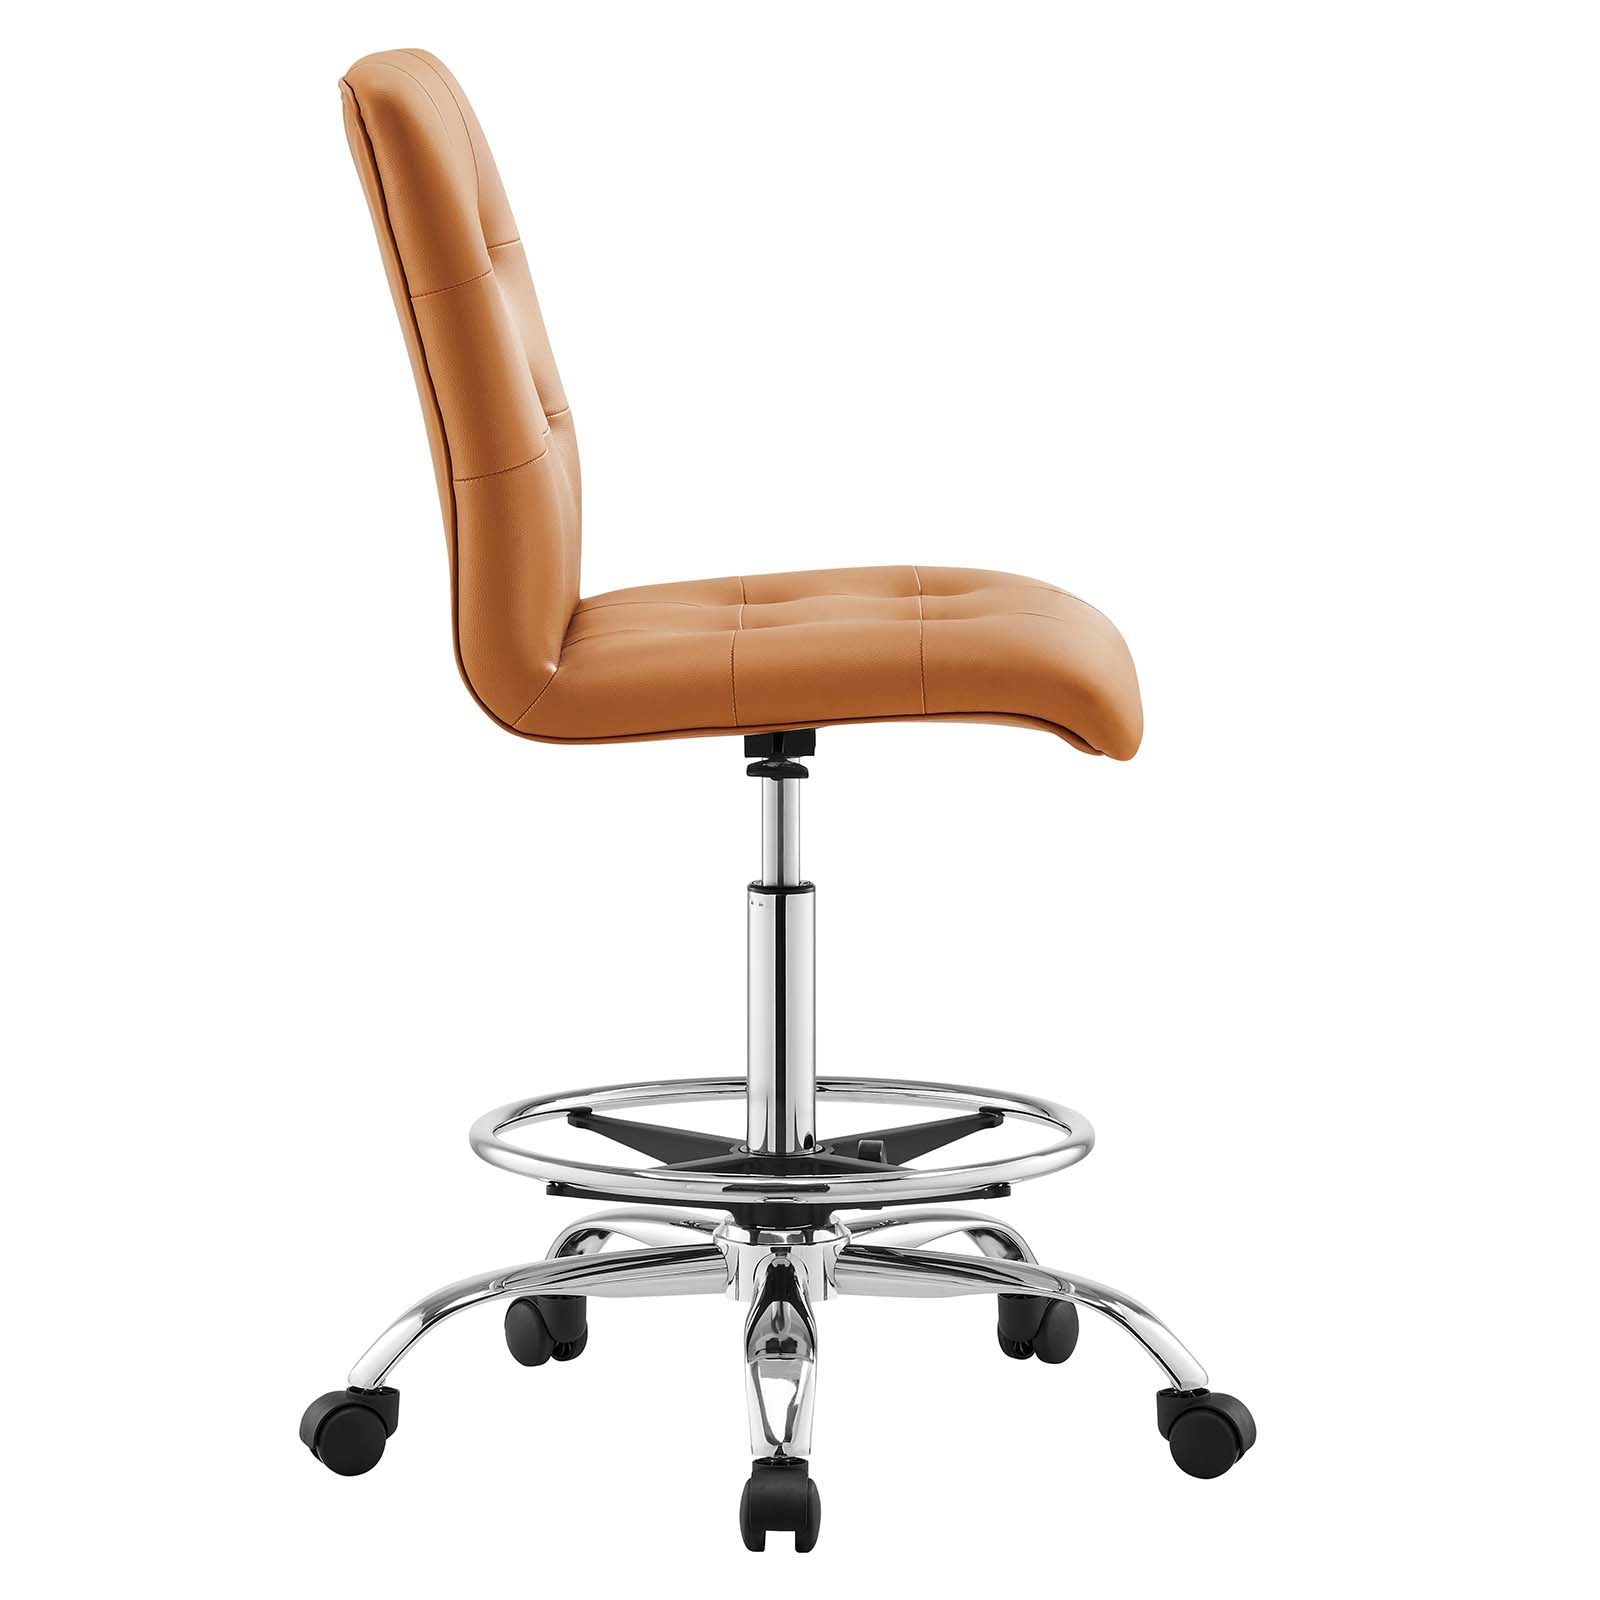 Prim Armless Vegan Leather Drafting Chair - East Shore Modern Home Furnishings